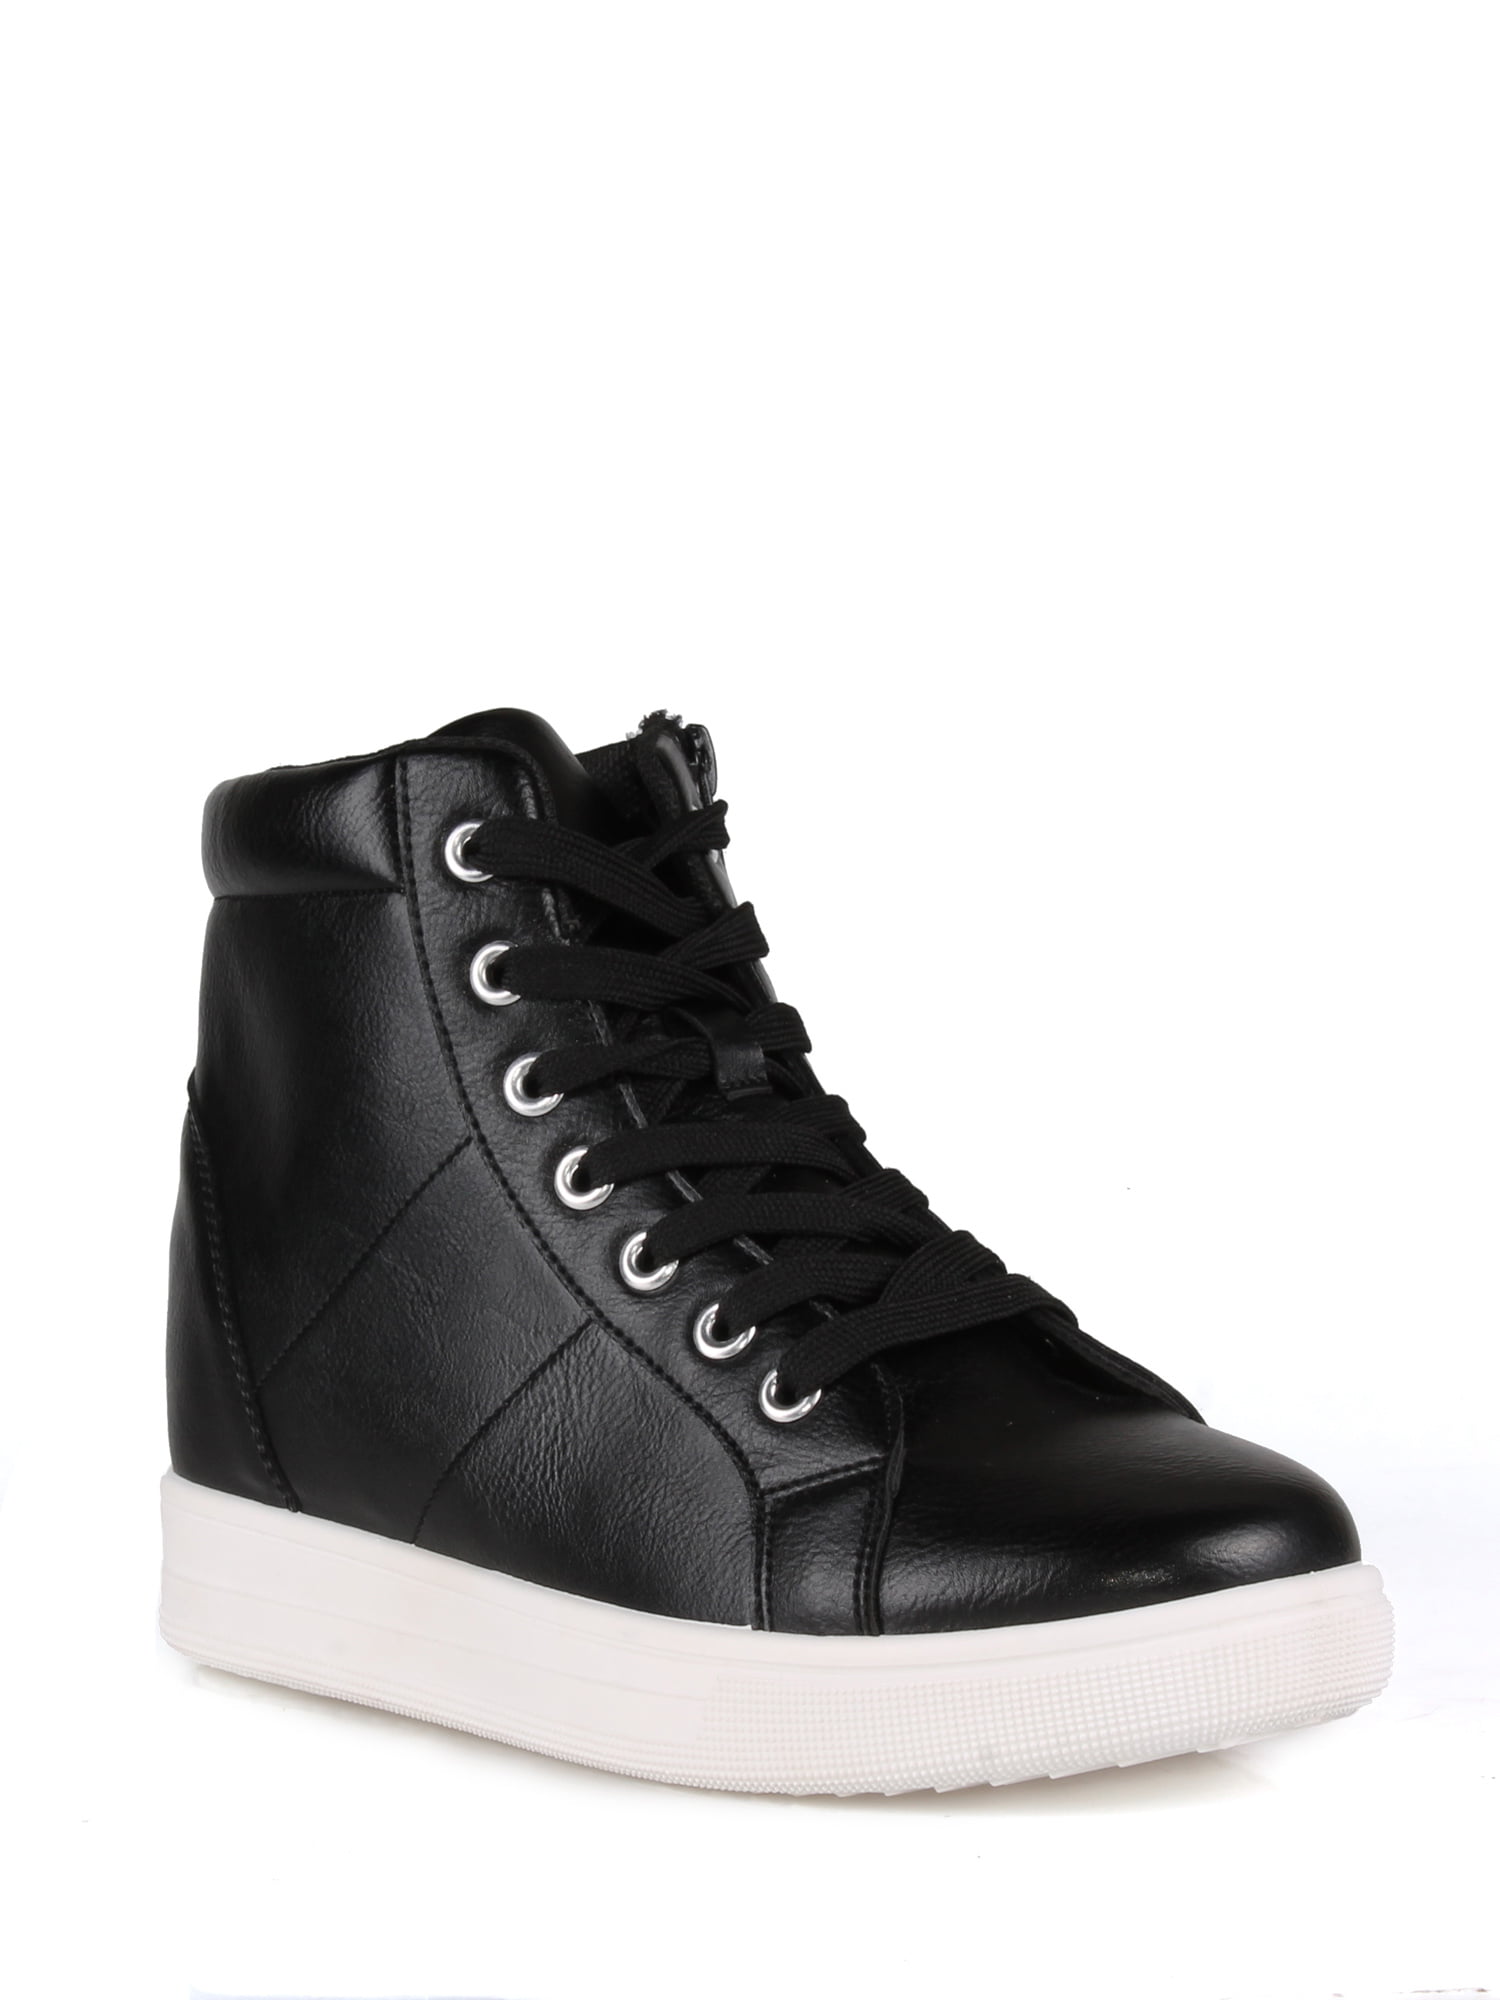 Kenneth Cole New York Women's Kam Wedge Hight Top Pull on Fashion Sneaker  Black Size 8.5 M - Walmart.com